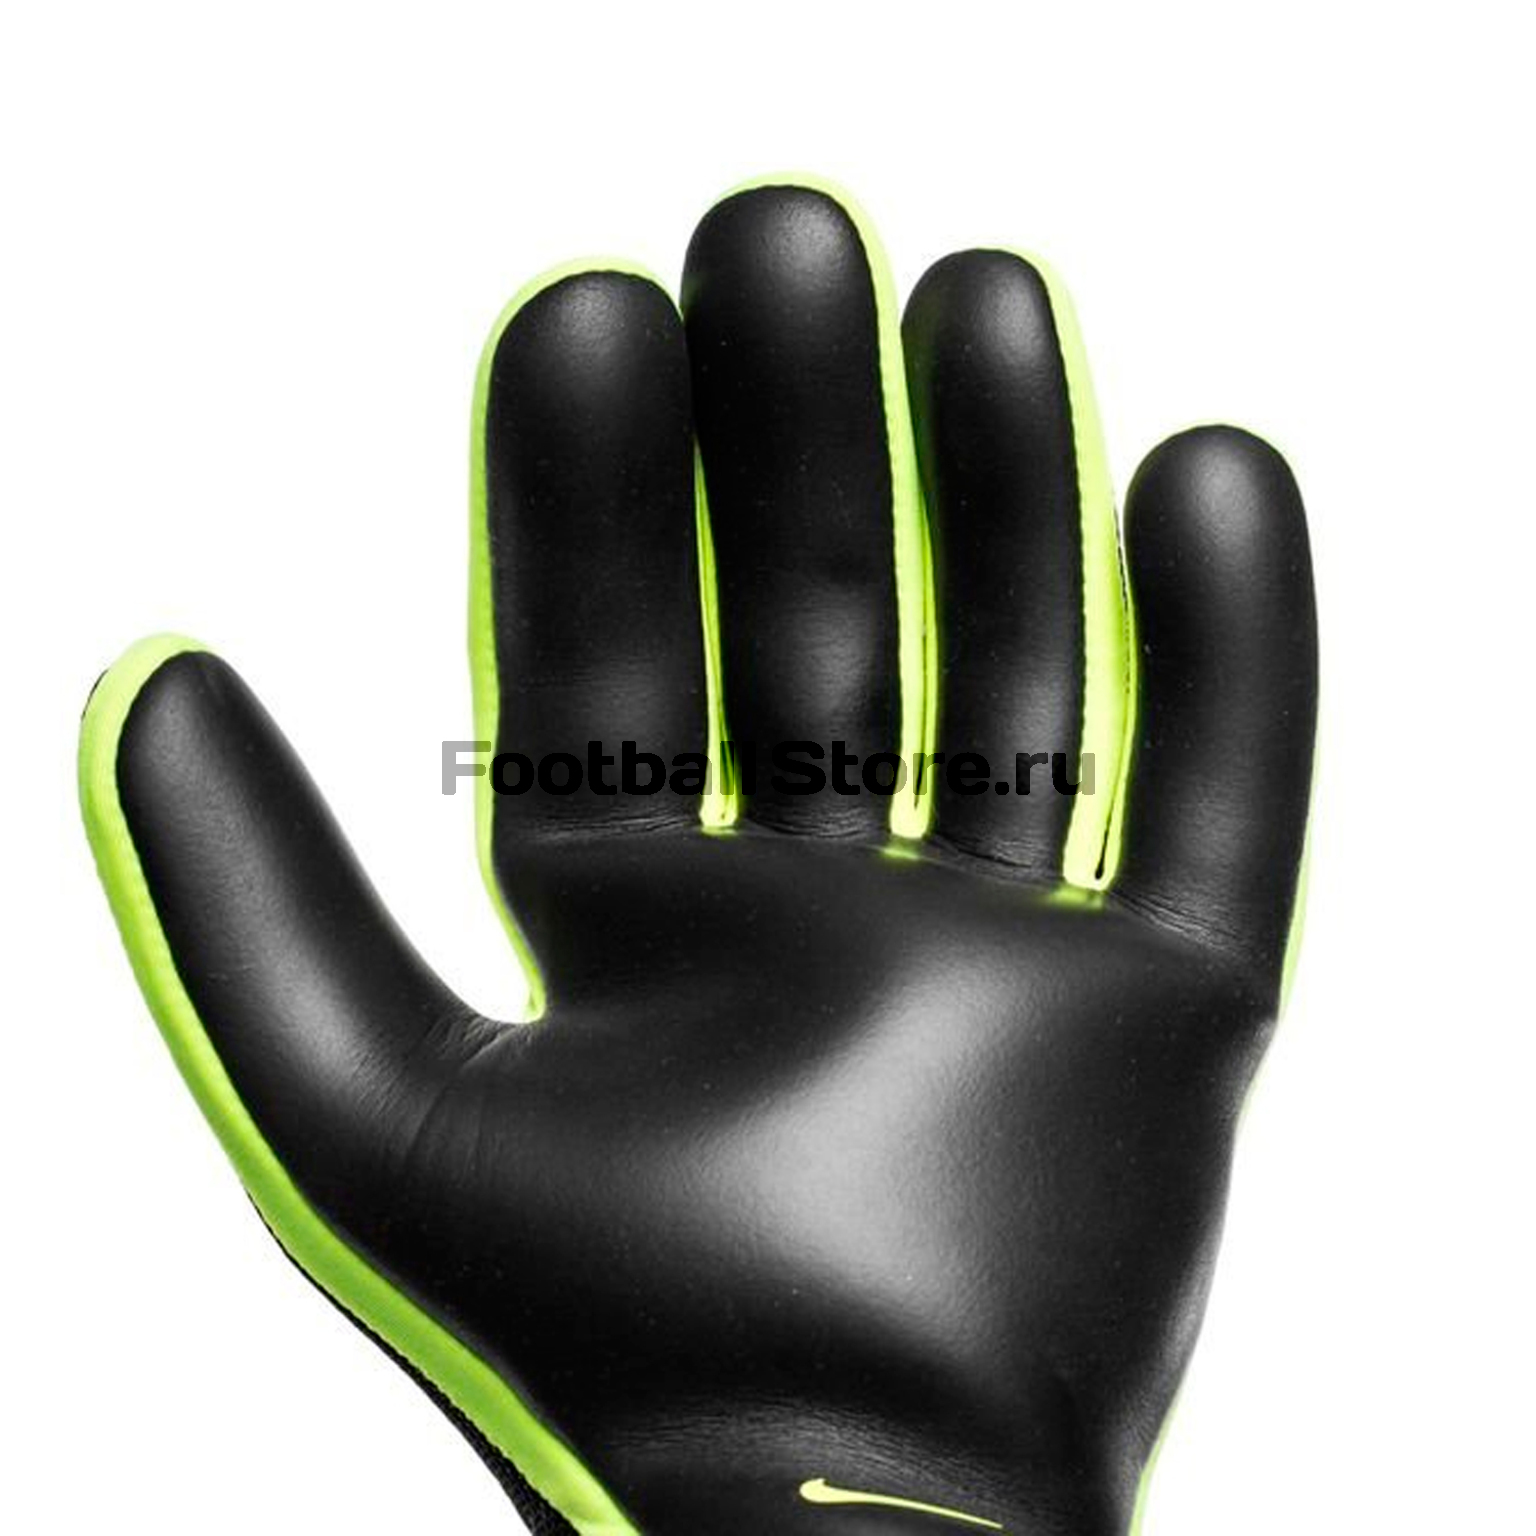 Перчатки вратарские Nike GK Mercurial Touch Elite GS0356-010 